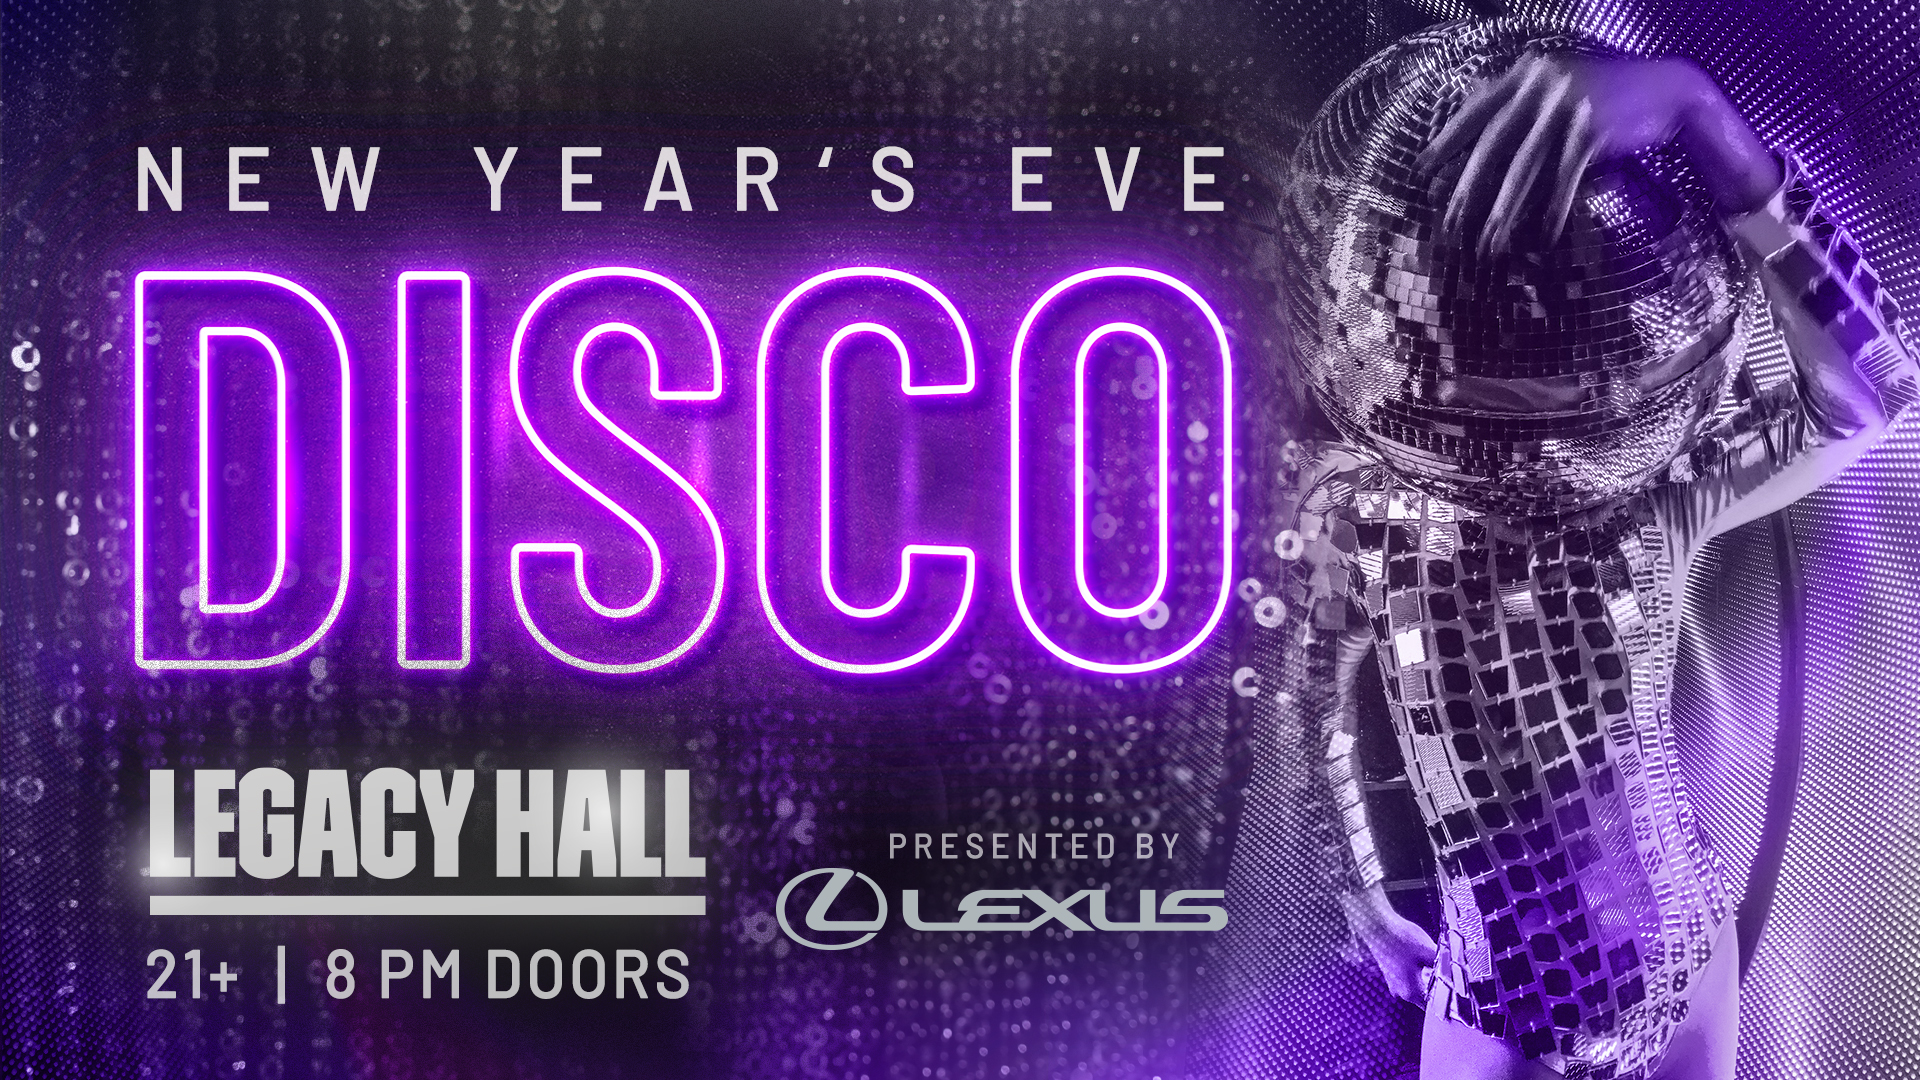 New Year’s Eve Disco - hero